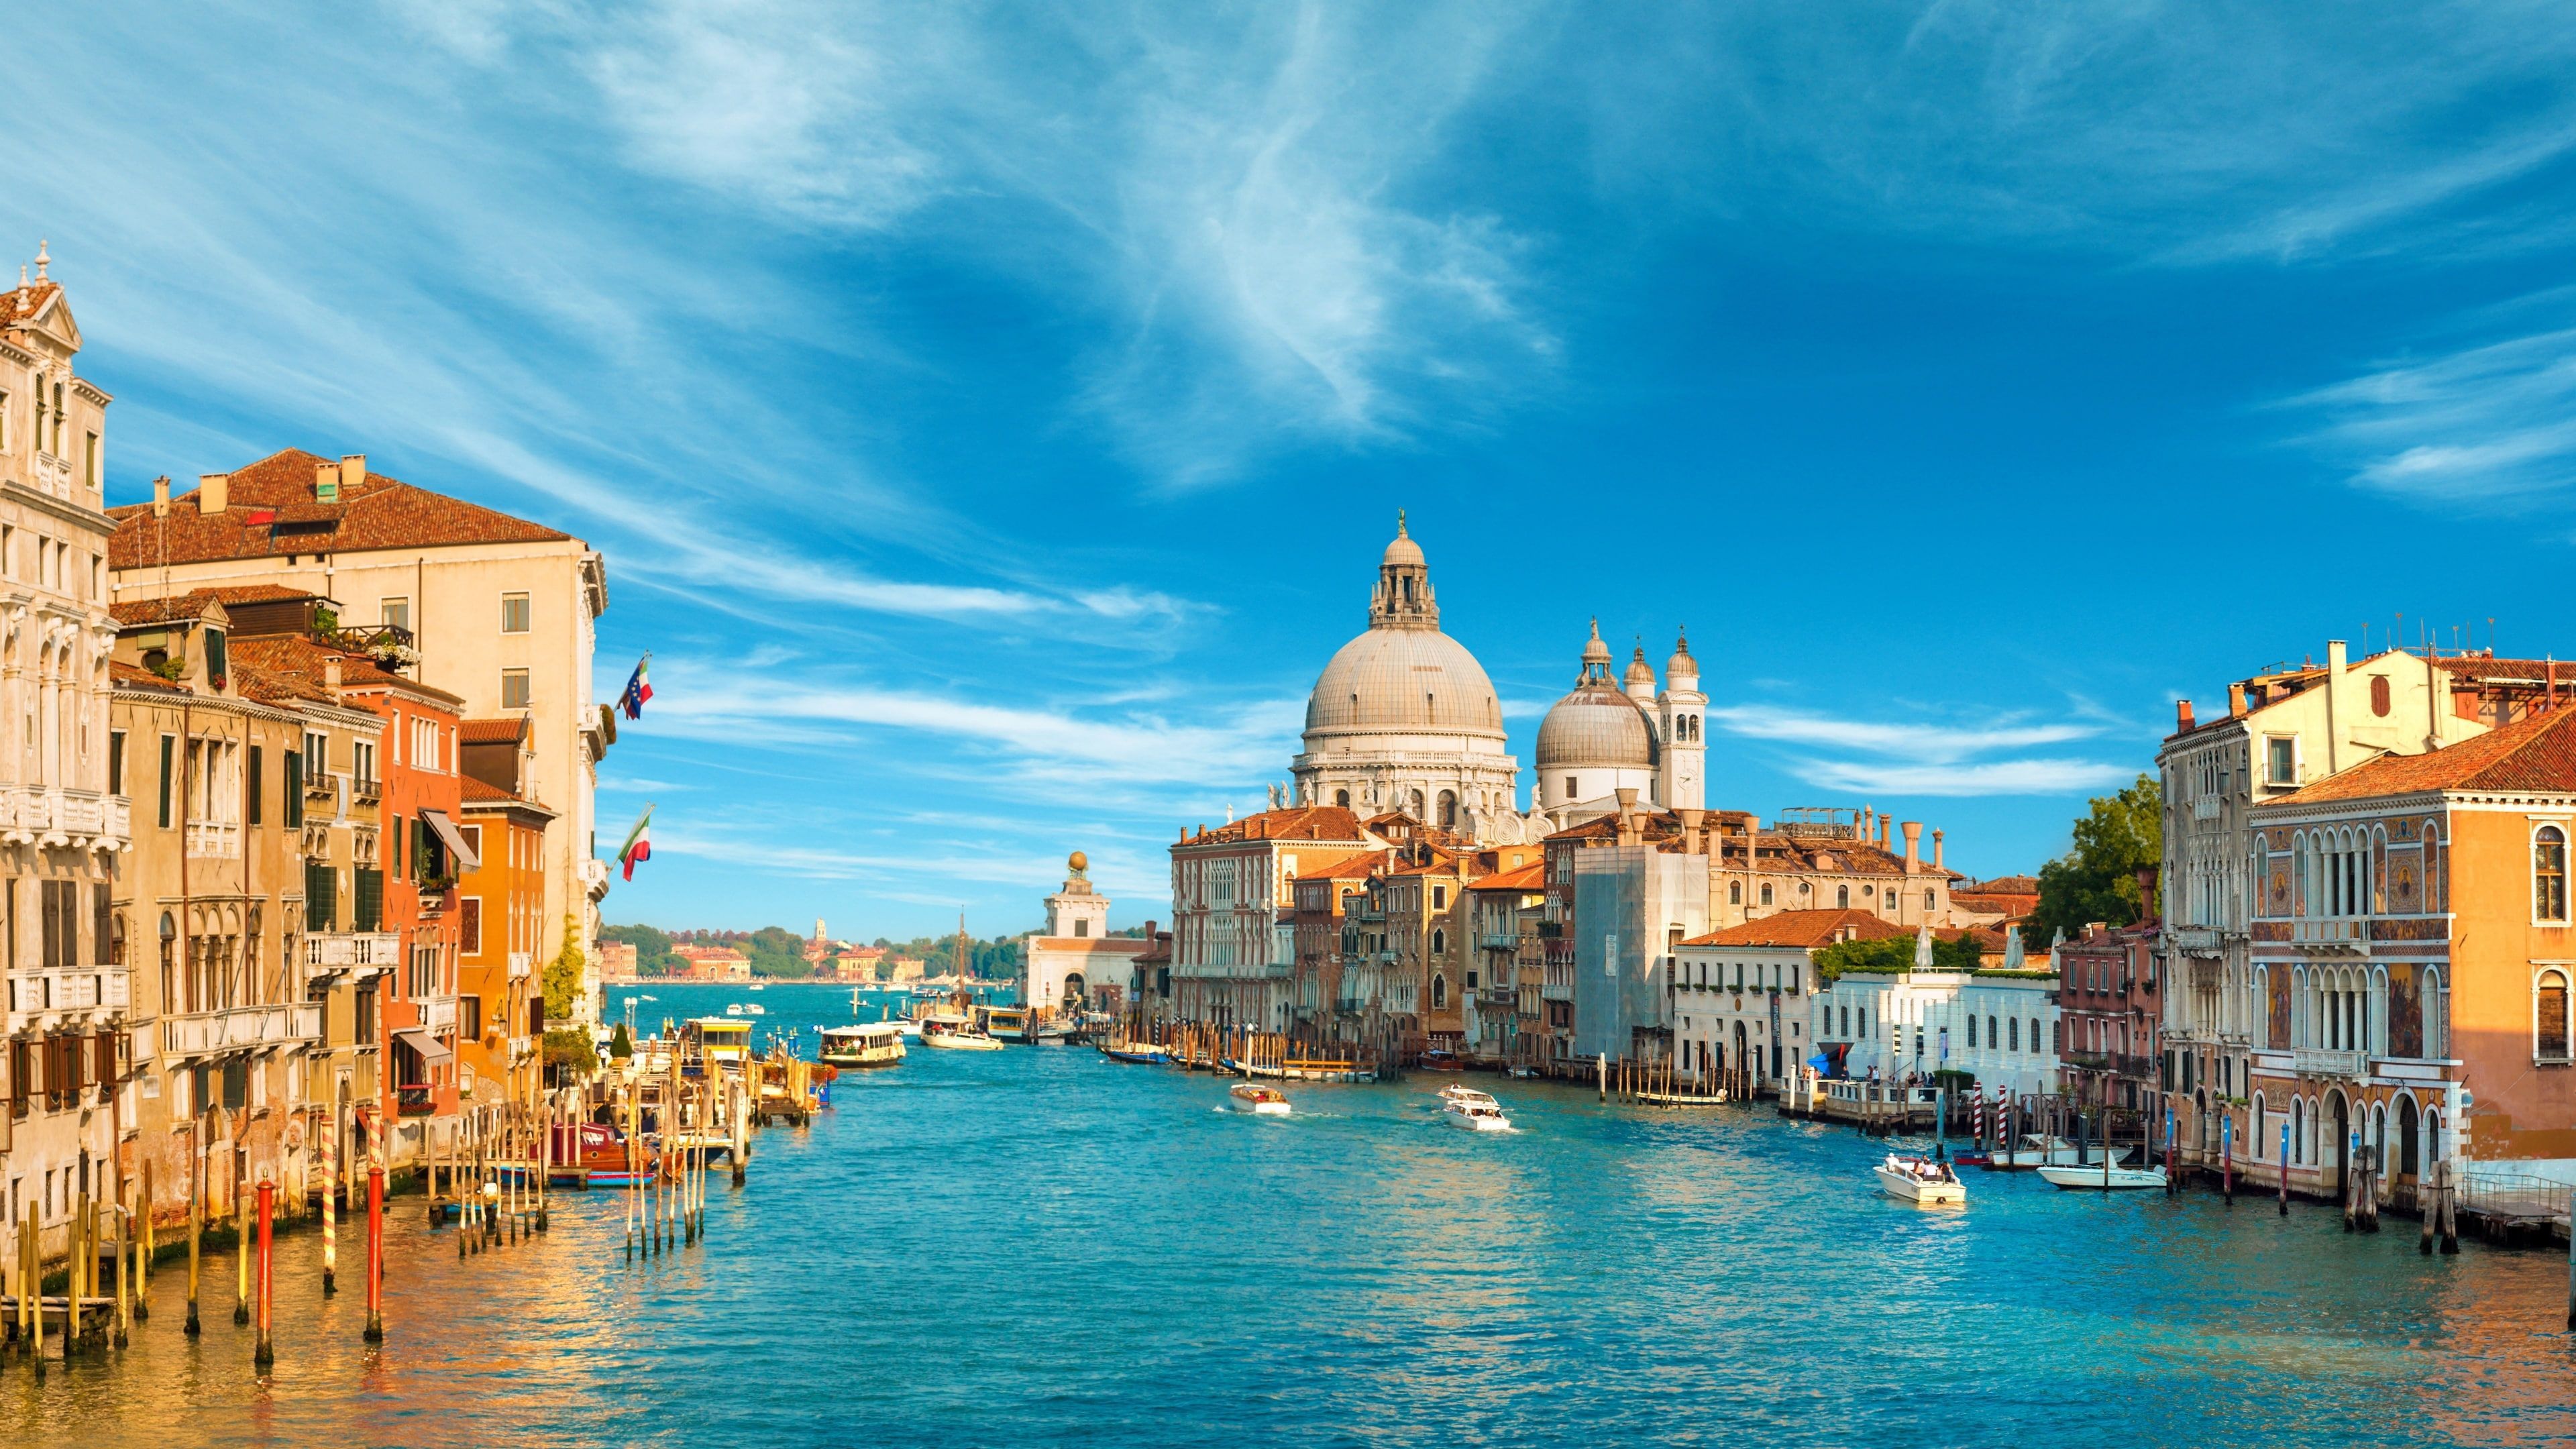 Grand Canal K #Venice #Italy K #wallpaper #hdwallpaper #desktop. Grand canal venice italy, Grand canal venice, Cruise destinations